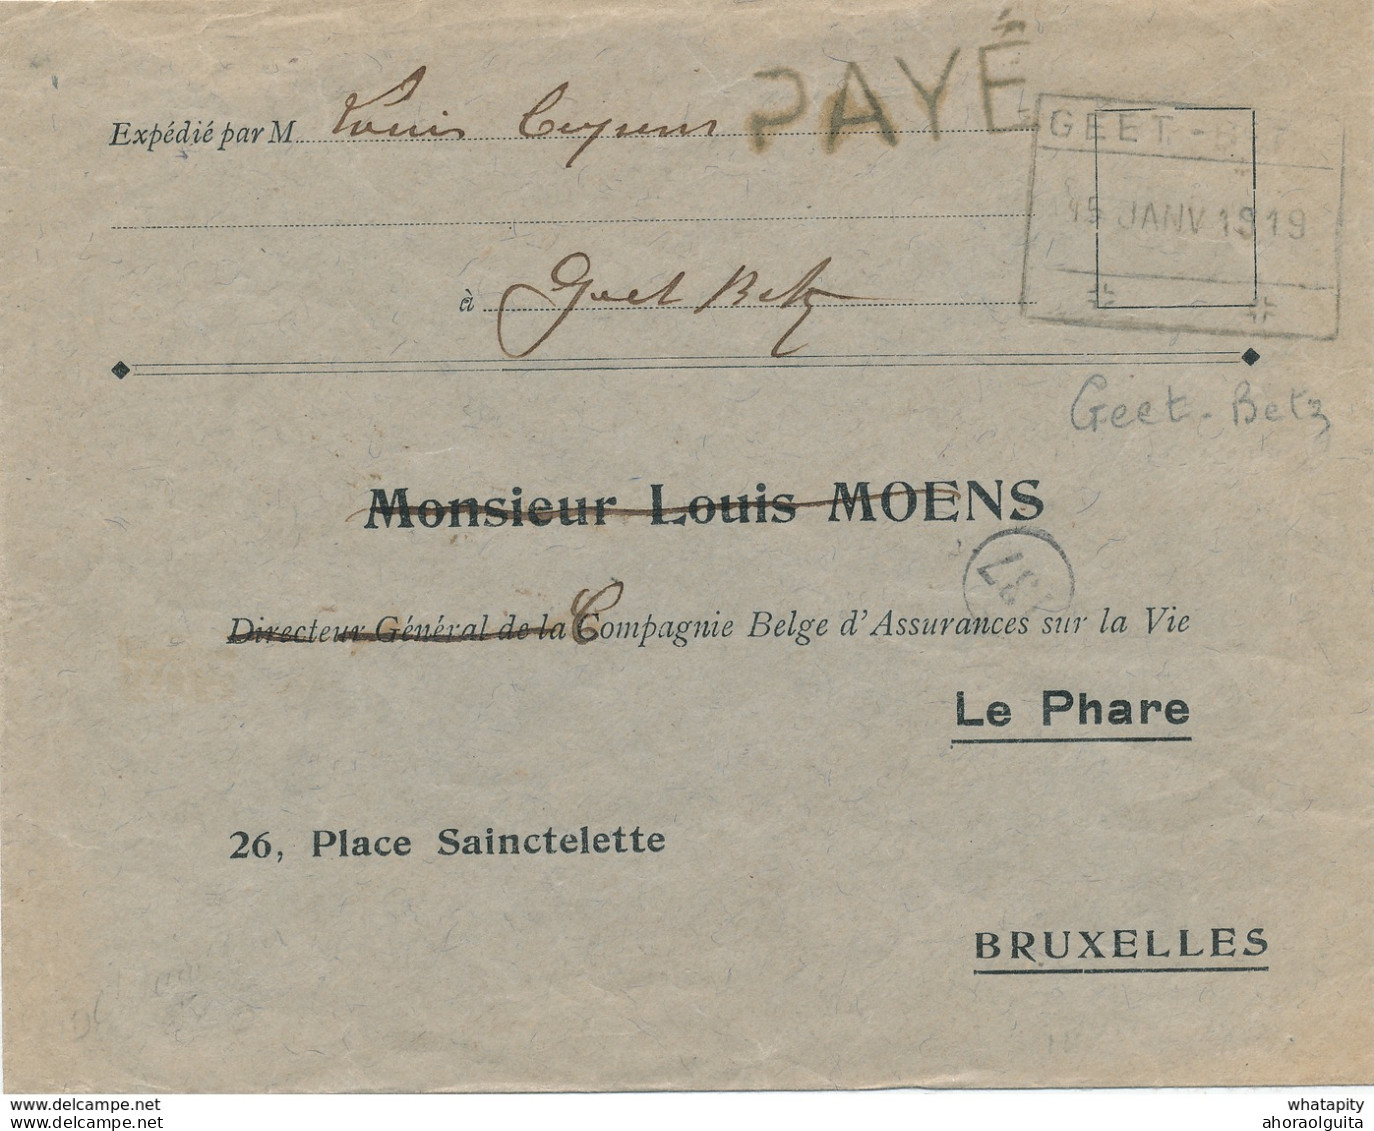 560/27 -  Enveloppe Port PAYE - Cachet De FORTUNE Rectangle Chemin De Fer GEET BETZ 1919 - Fortune (1919)